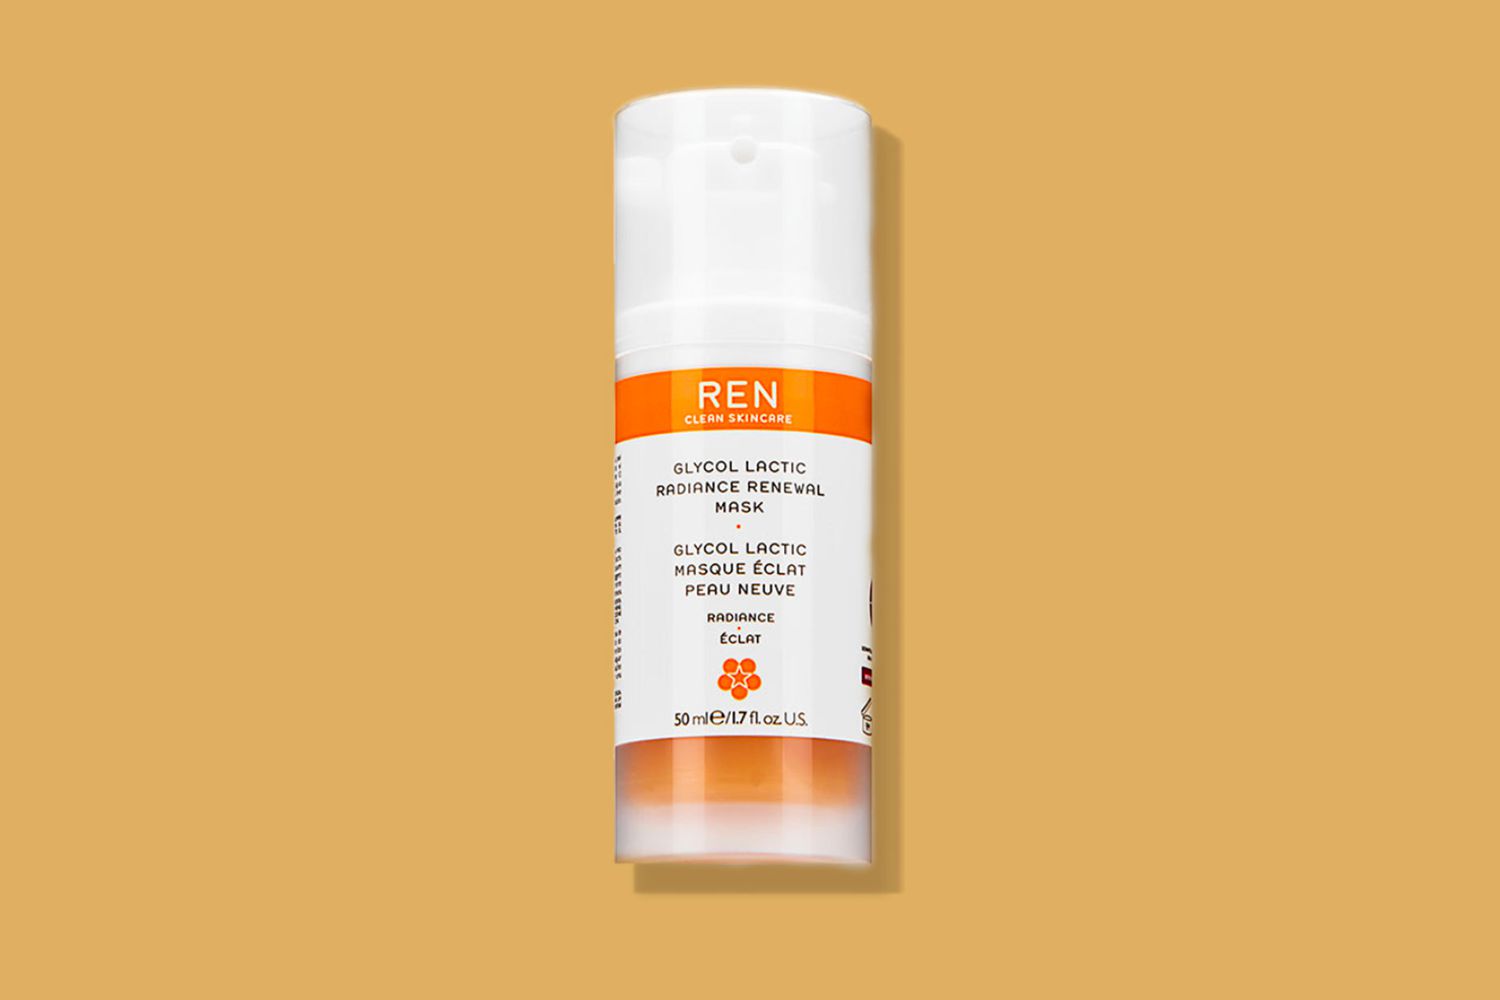 Ren Clean Skincare